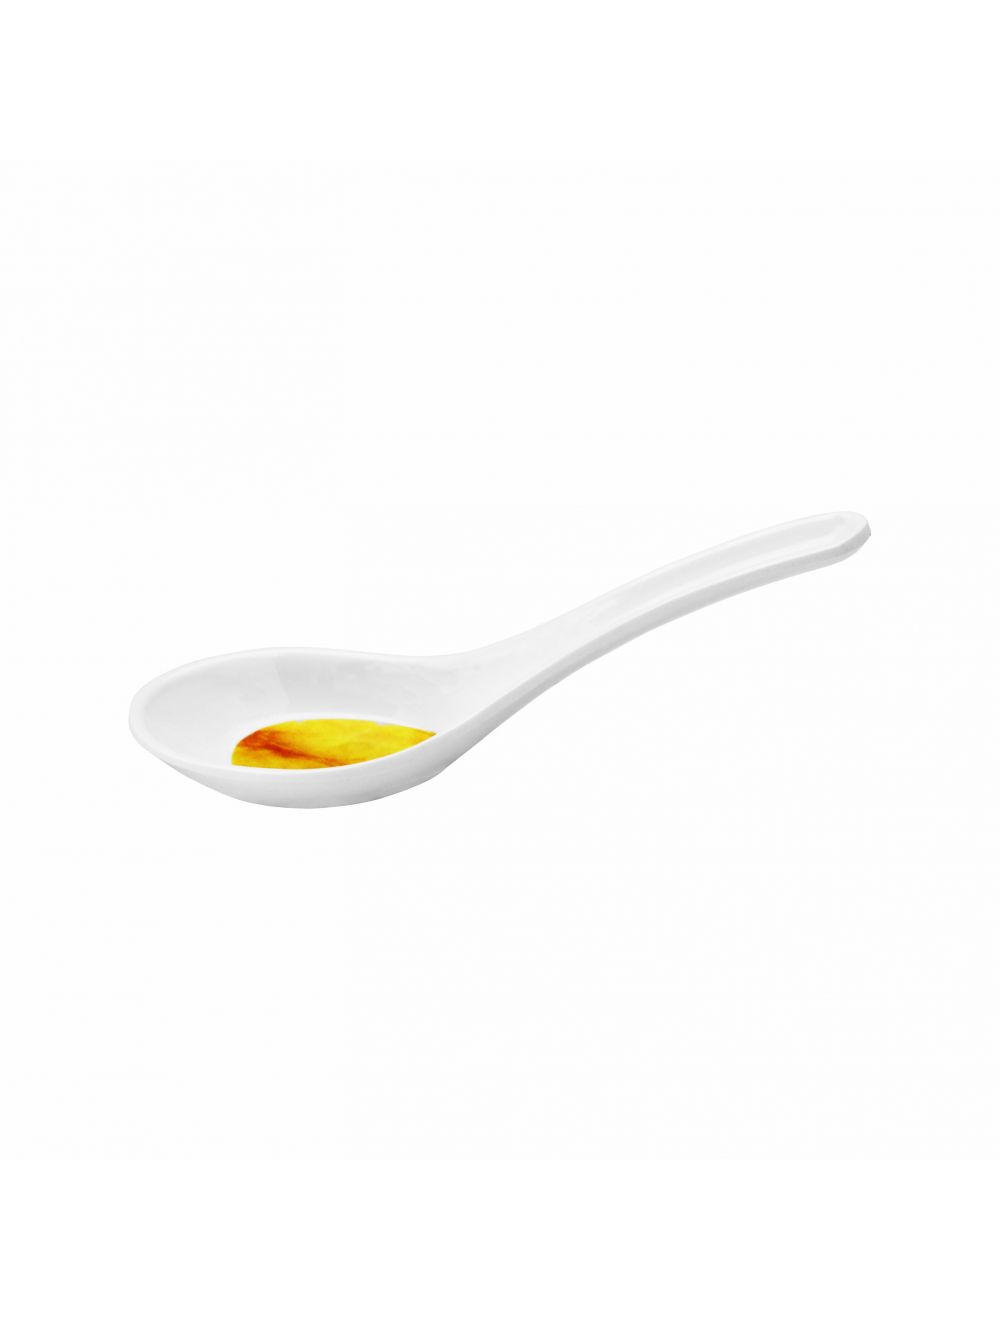 Dinewell Melamine Soup Spoon Hotensia-DWS5111HO